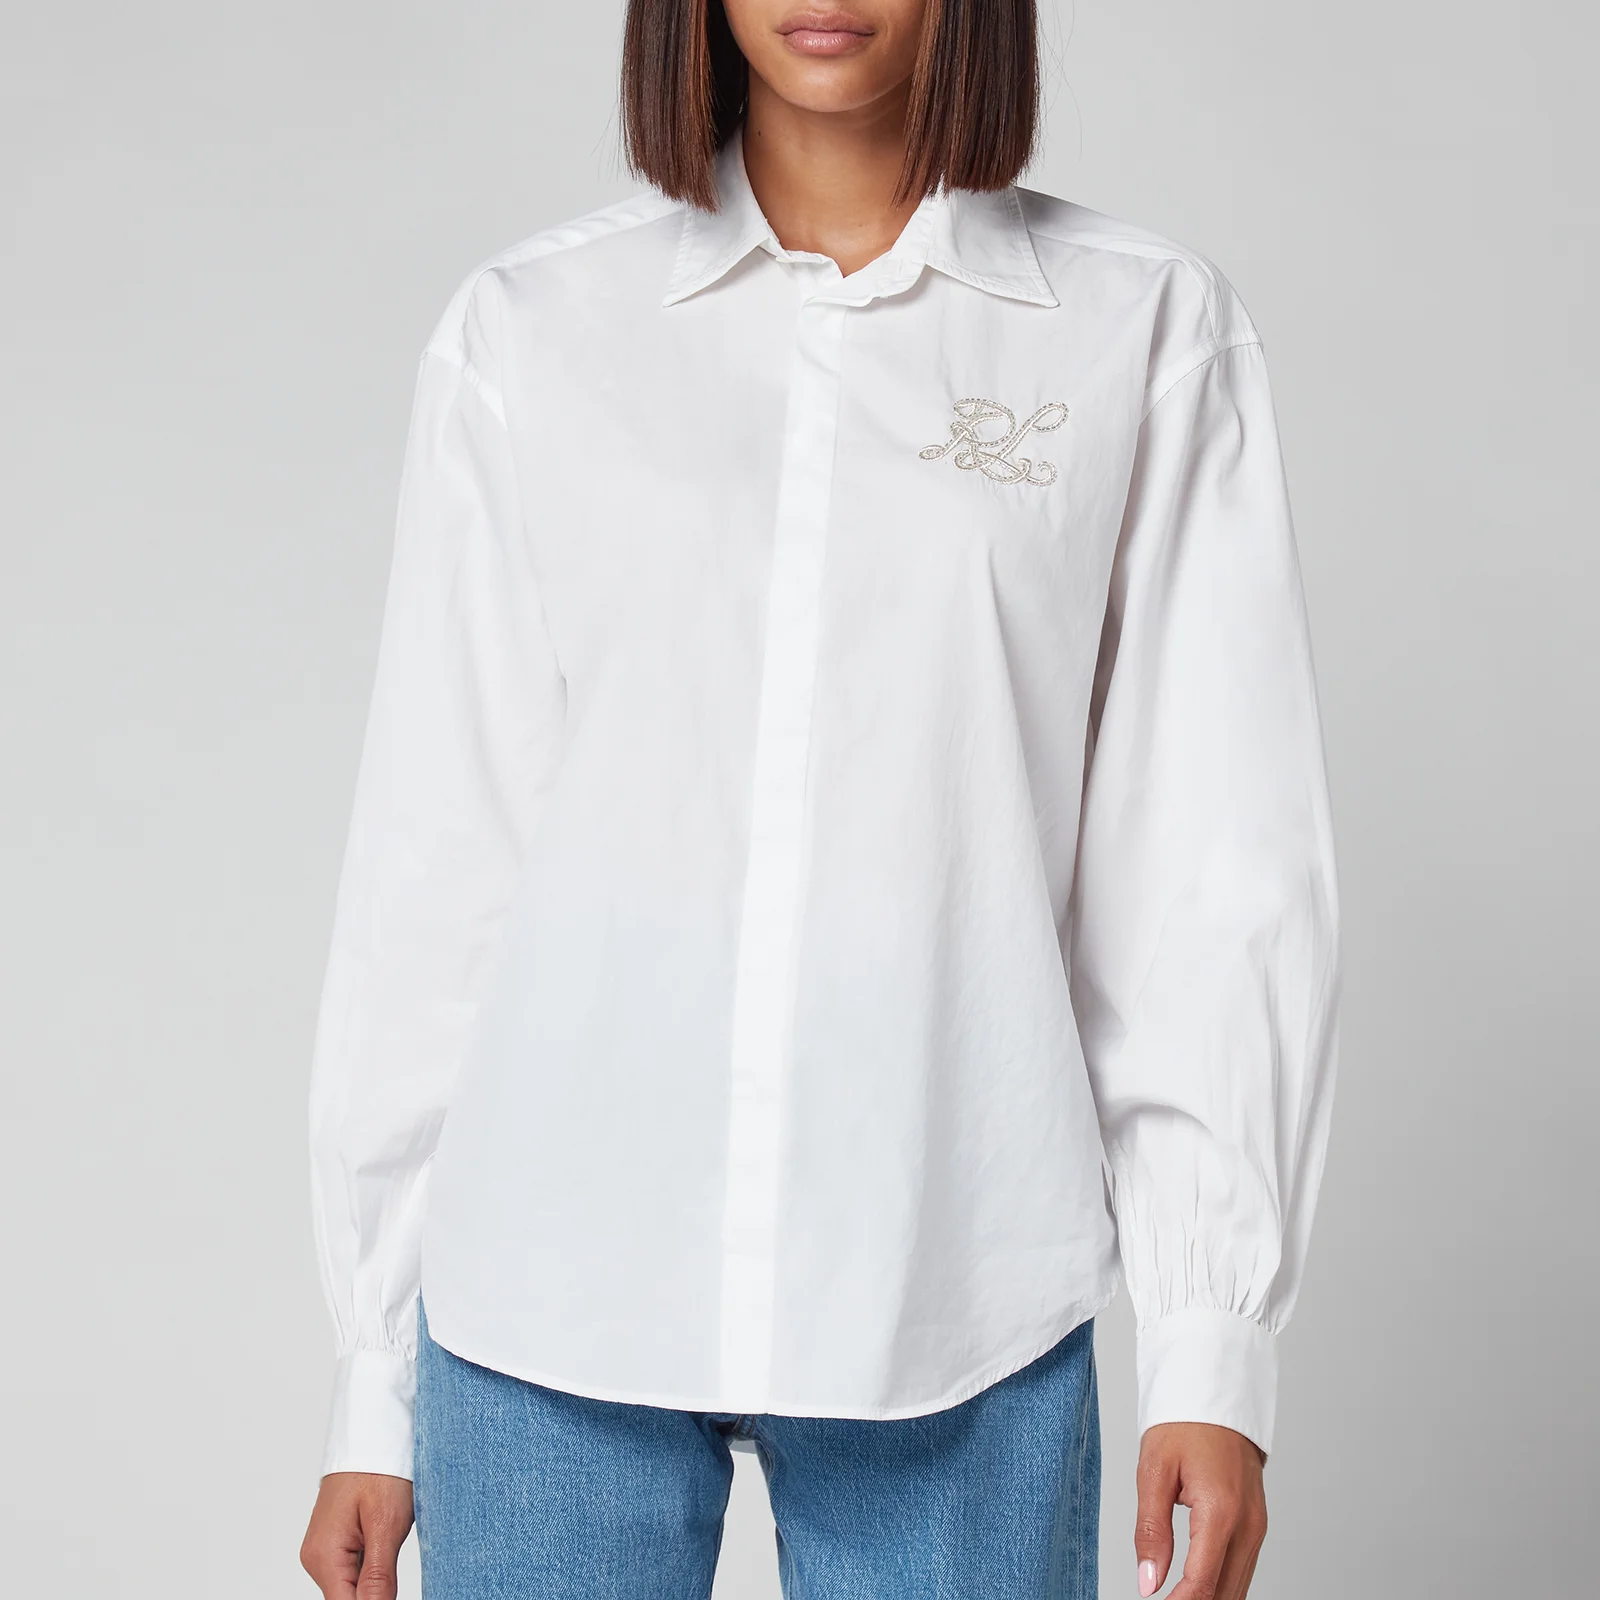 Polo Ralph Lauren Women's Oversized Shirt - White Image 1